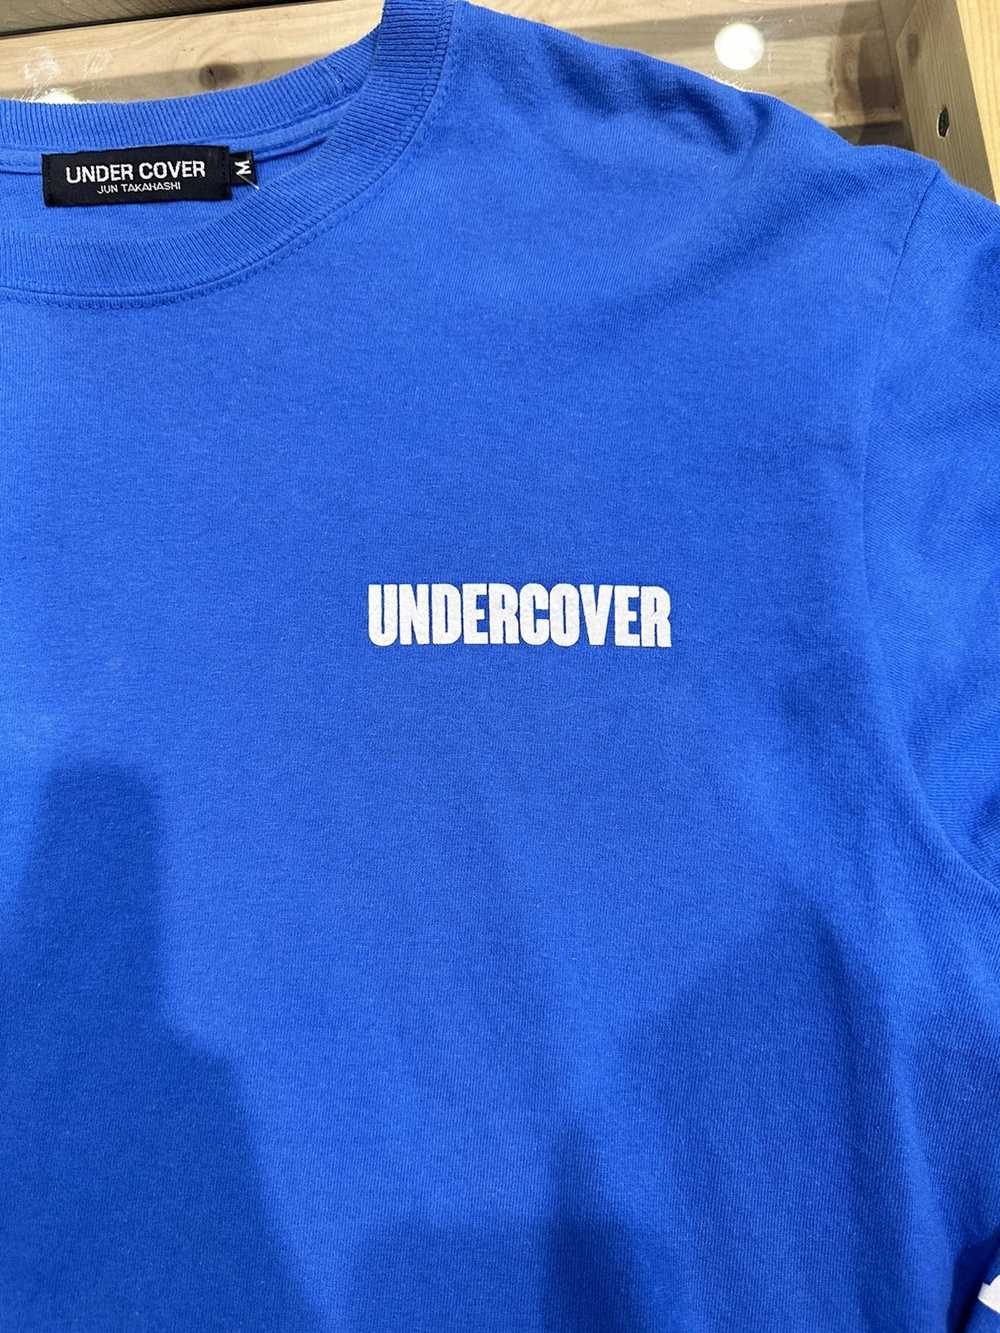 Undercover Undercover Longsleeve Size Medium - image 2